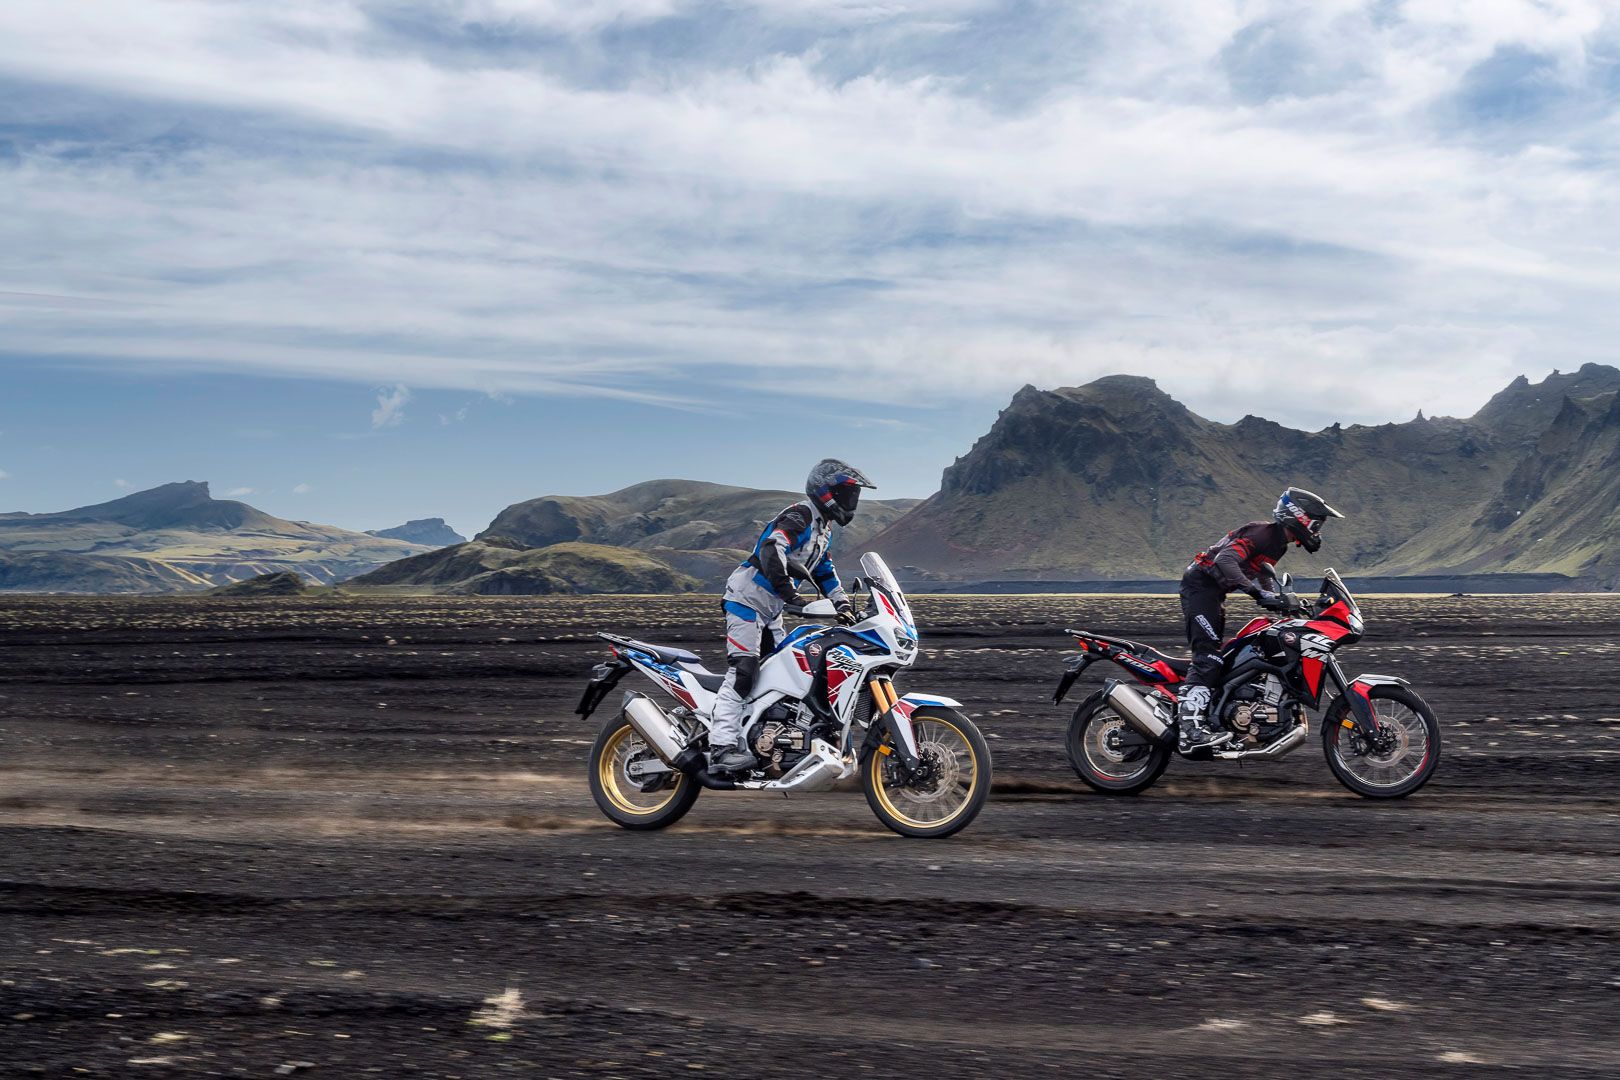 Two riders racing 2022 Honda Africa Twin models in dirt